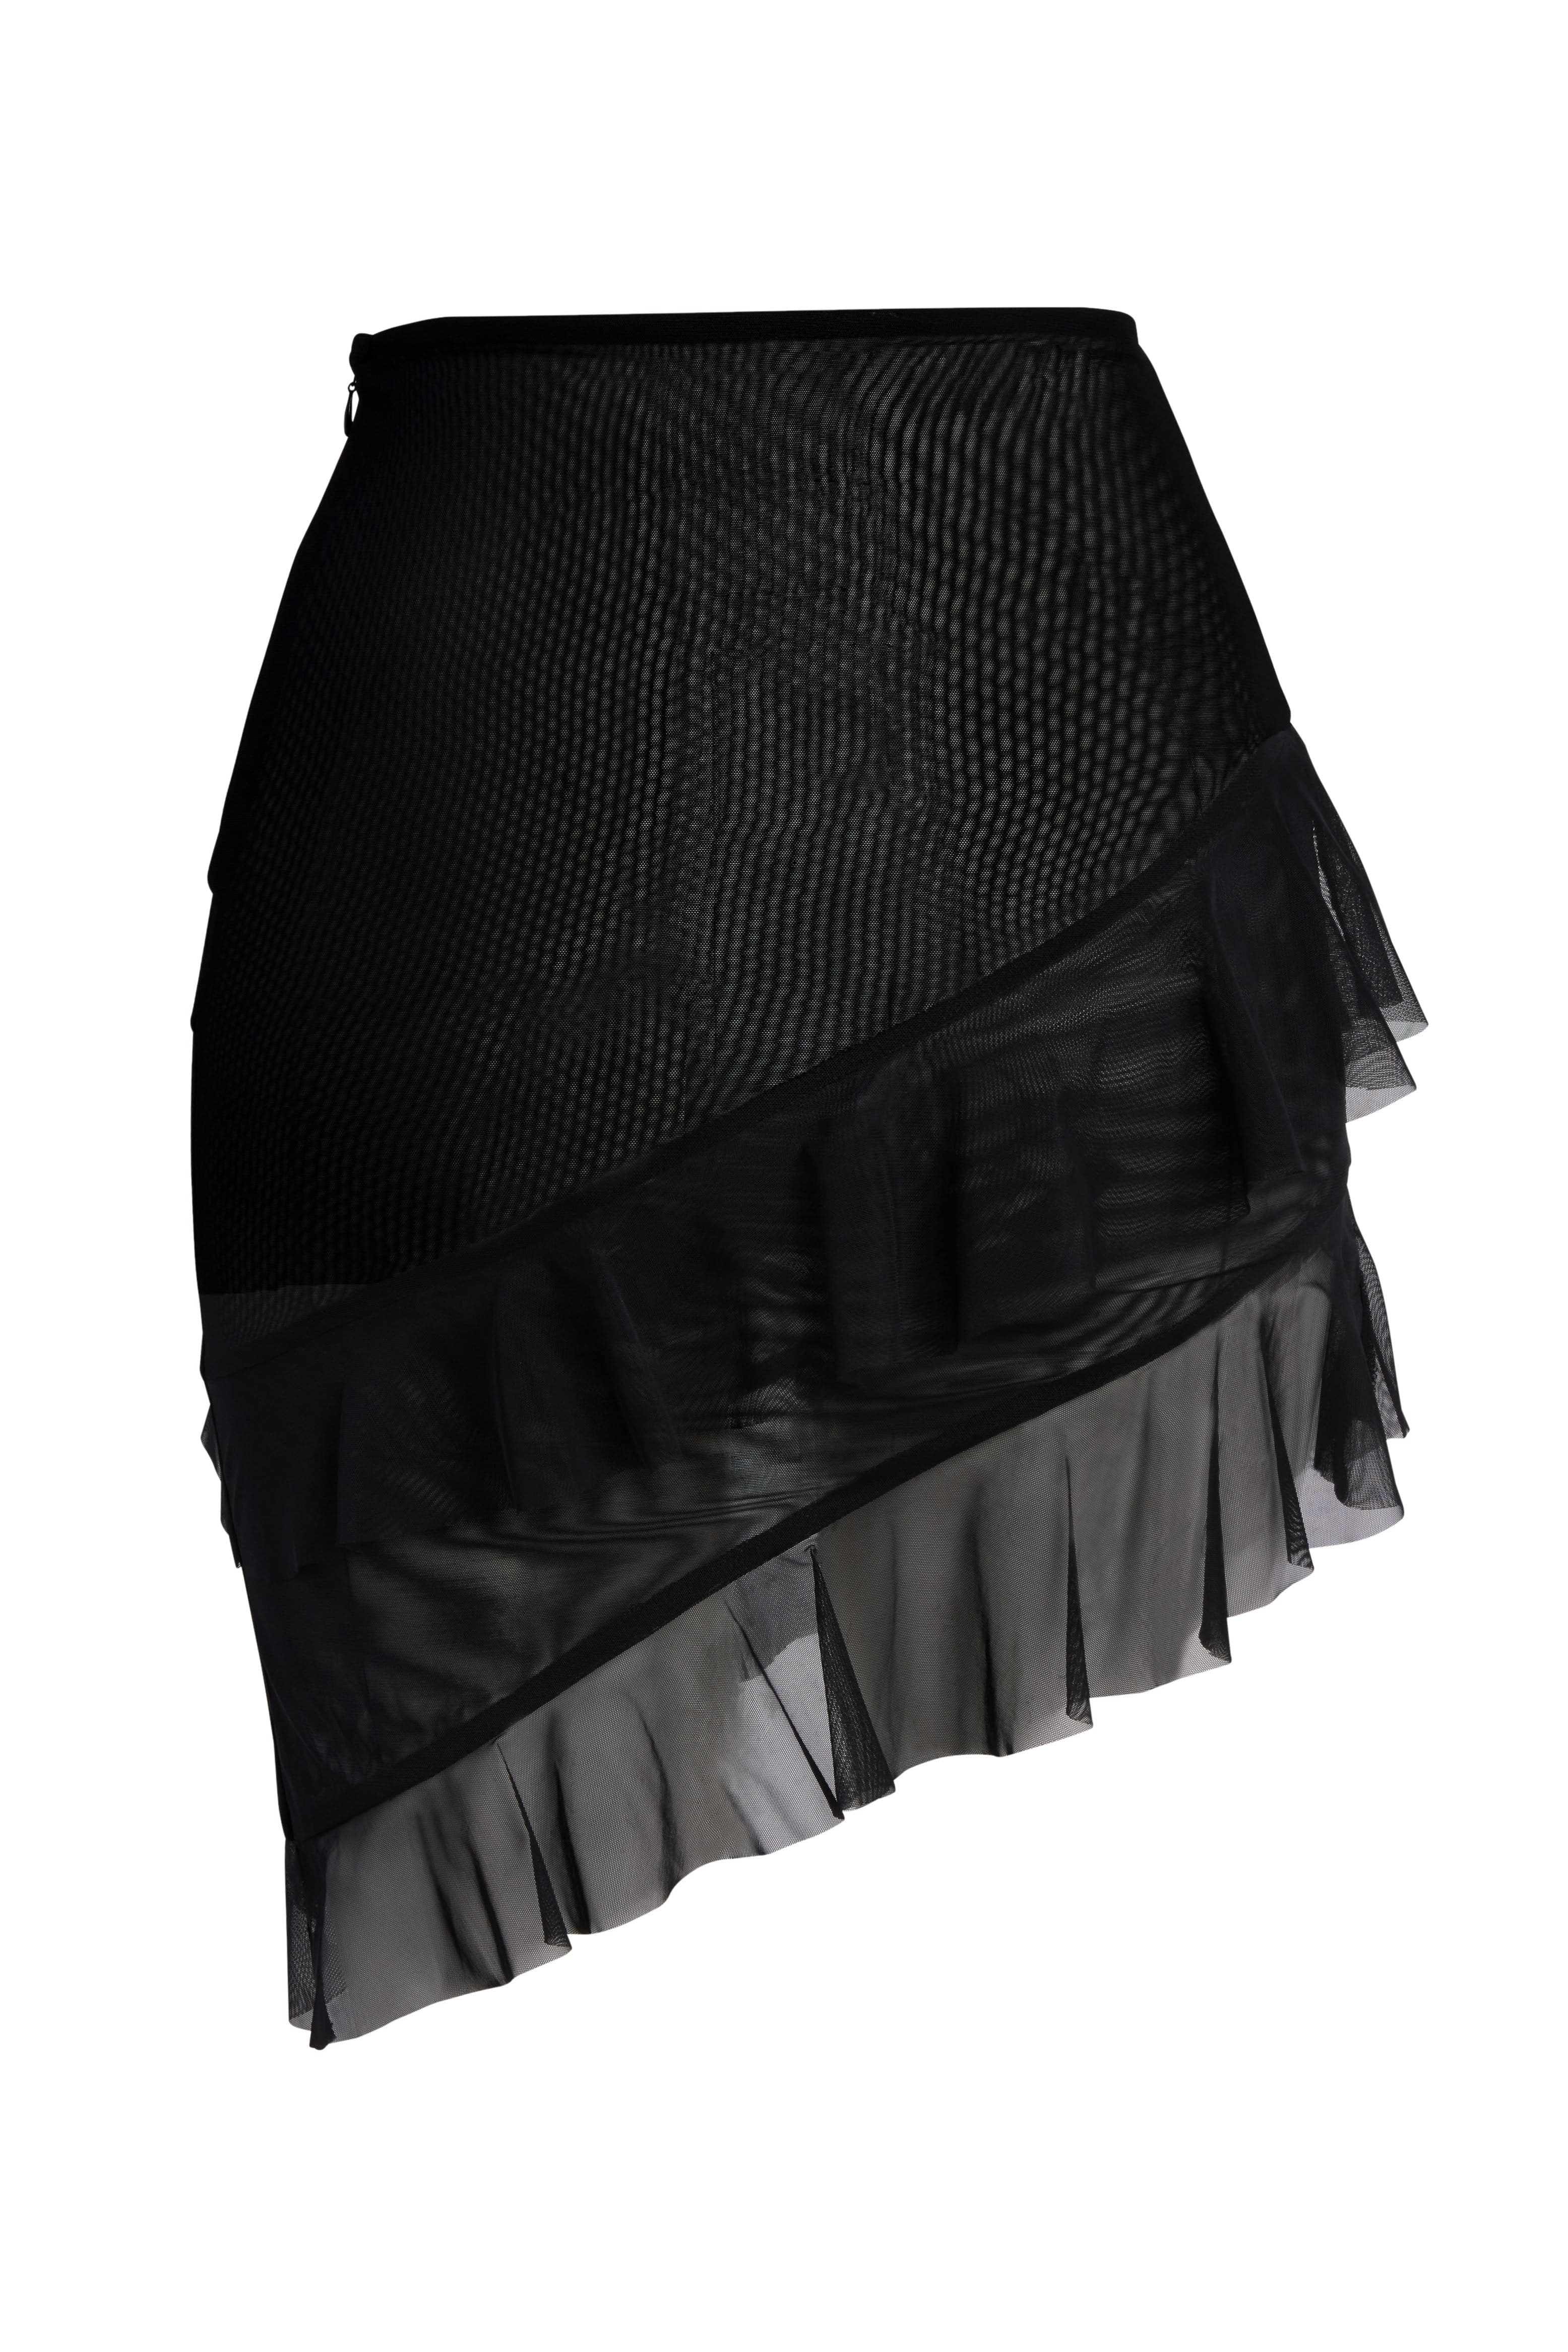 LEAU - Canary Ruffle Mesh Skirt in Black.